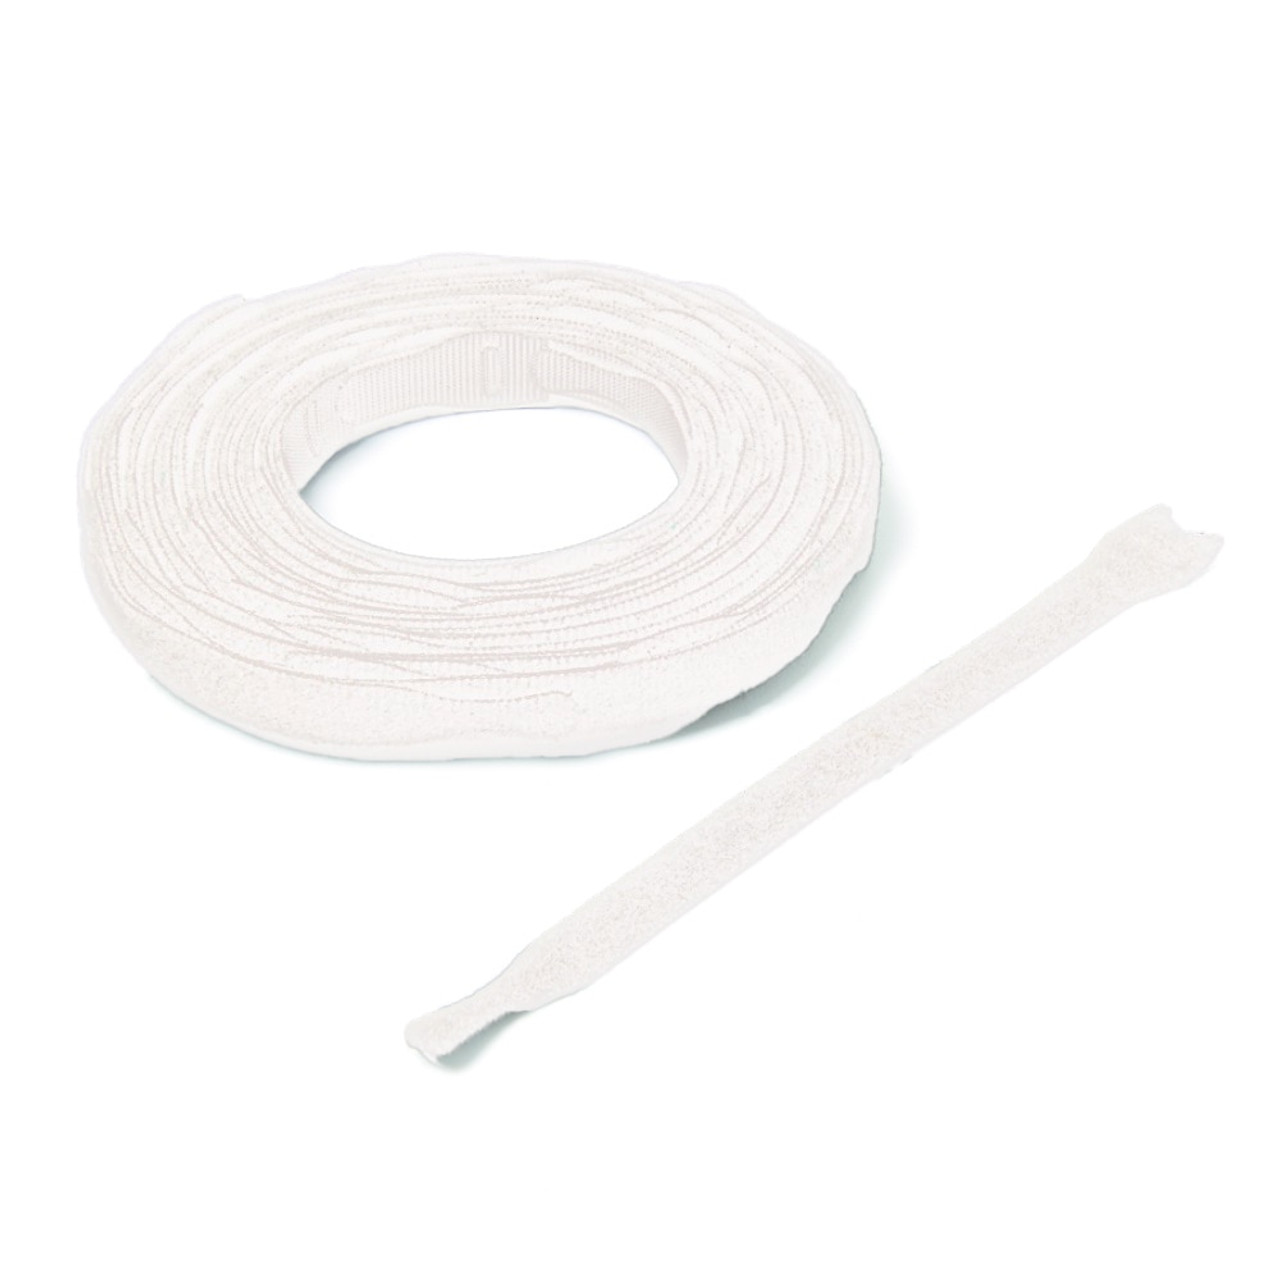 VELCRO ® Brand ONE-WRAP ® Die-Cut Straps - White / Velcro Straps - Bundling Straps - Velcro Tie - Velcro Strap